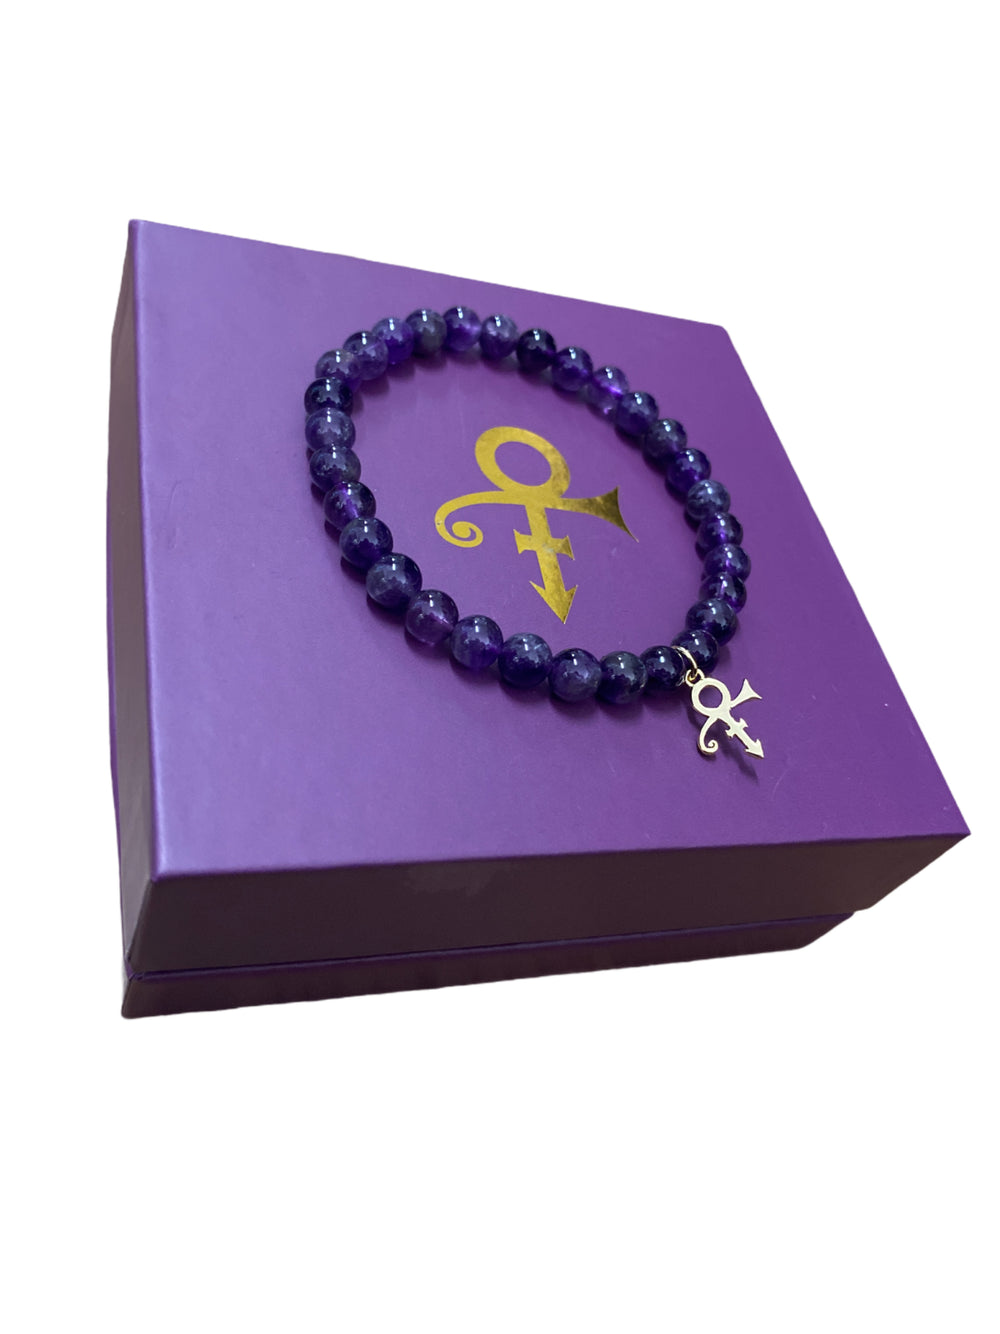 Prince – Official Estate Gold Beaded Bracelet Love Symbol Boxed